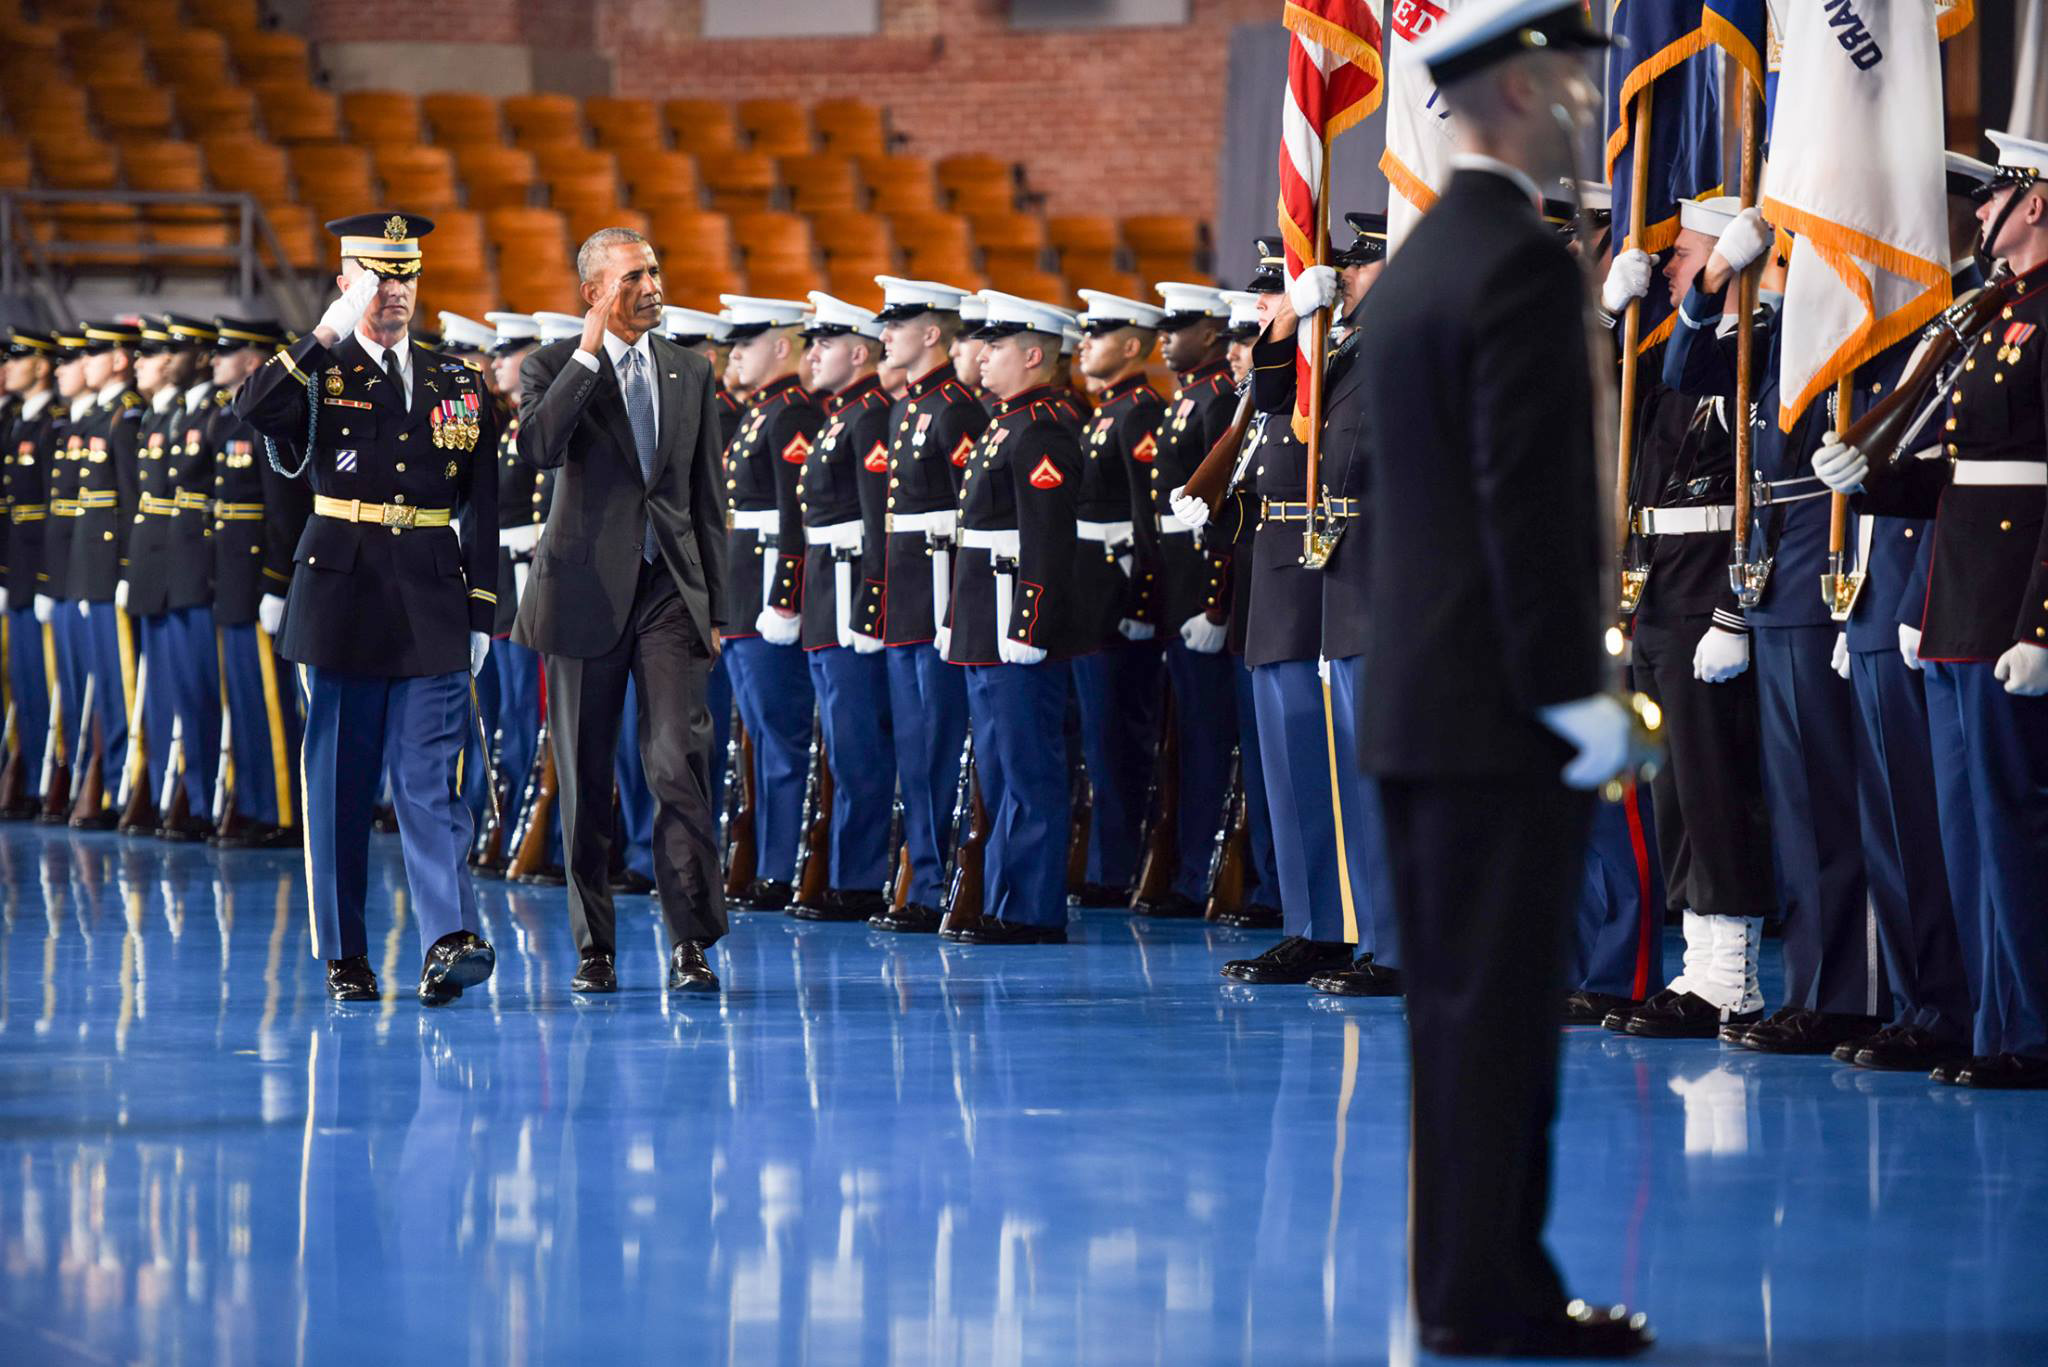 File:Obama inauguration 21 gun salute.JPG - Wikimedia Commons